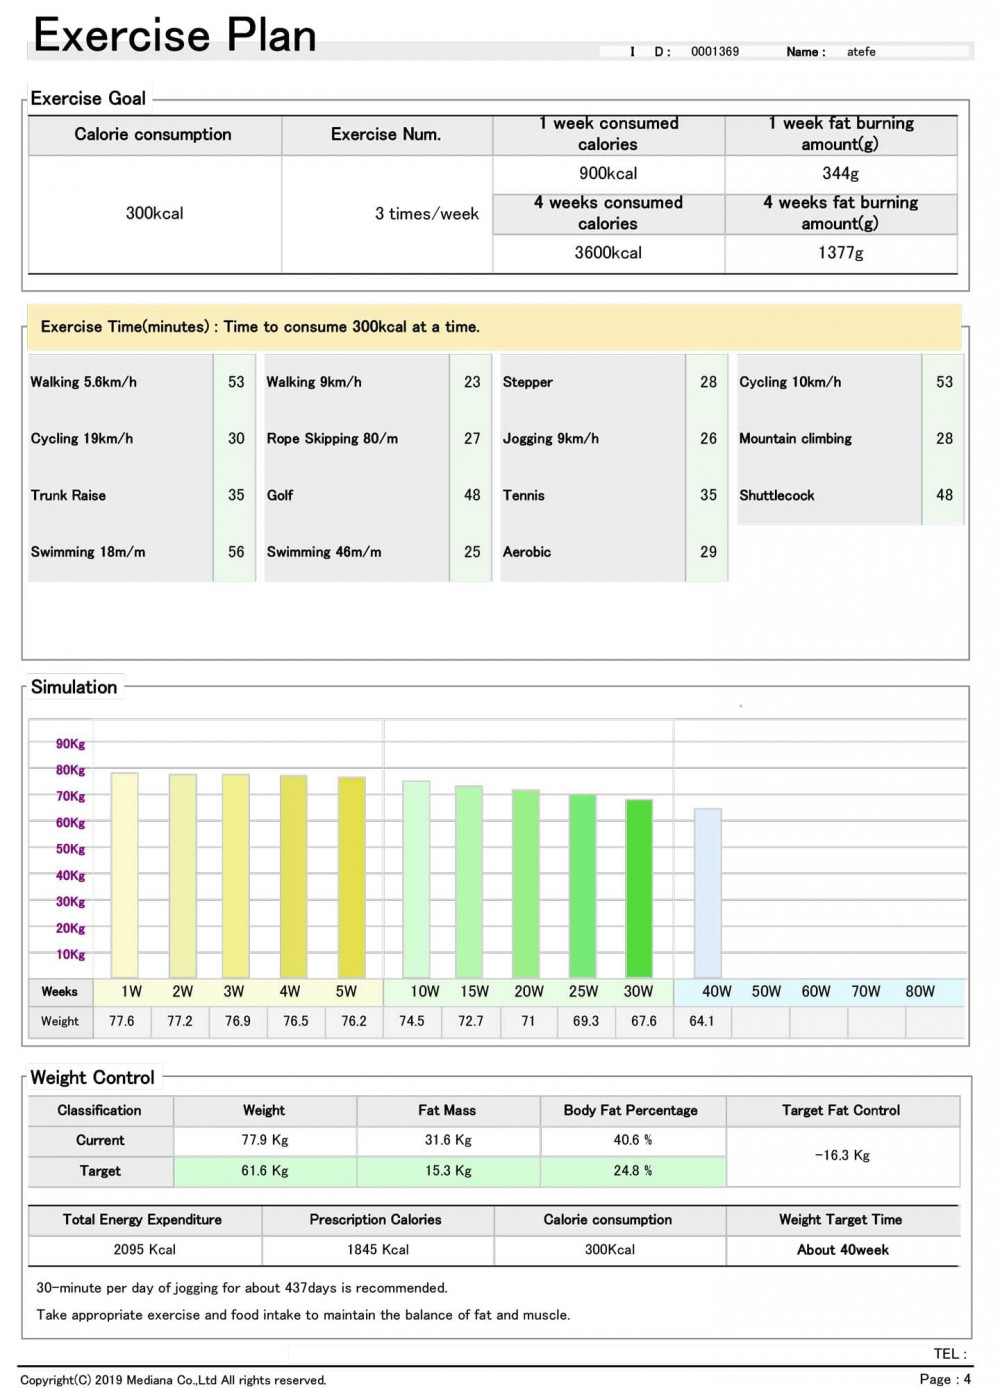 Mediana I55 Premium Body Composition Analyzer - Compare to InBody 770